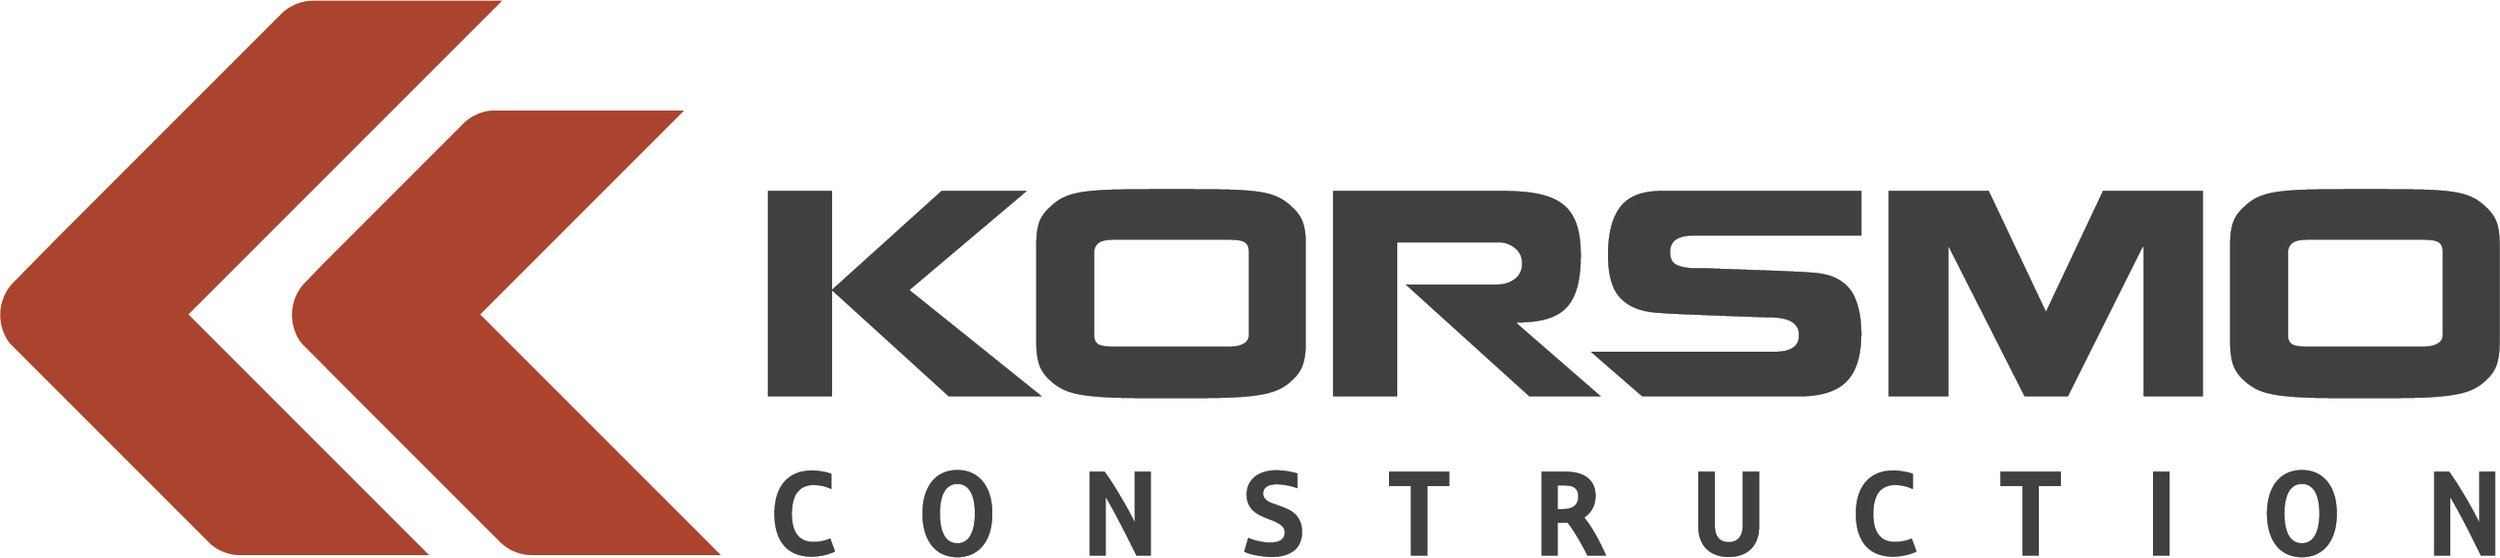 a. Korsmo Logo - hi-rez for print.jpg